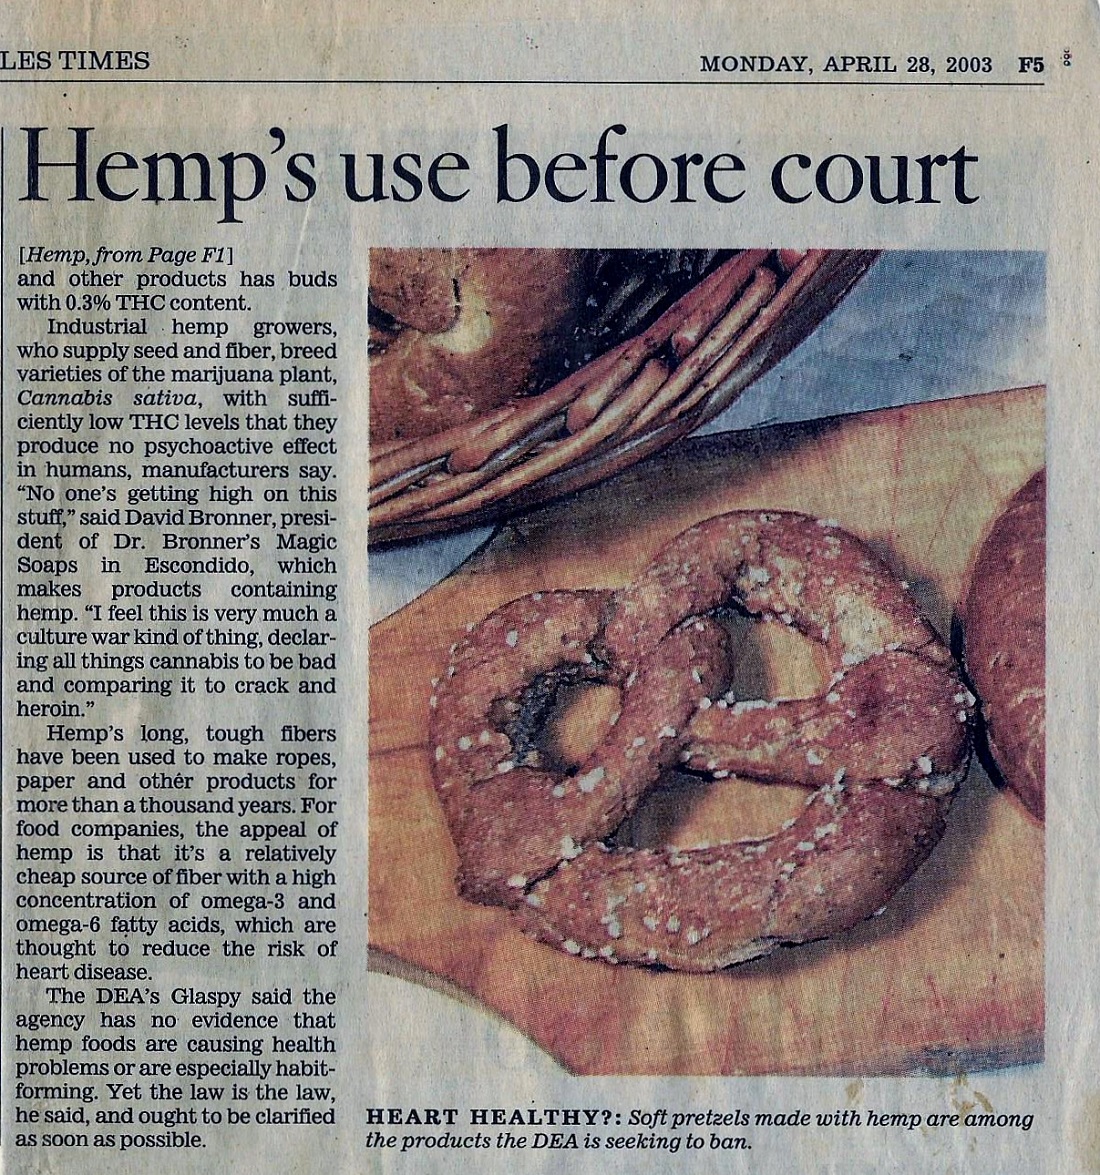 Hempzels(tm) in LA Times when DEA Was trying to &quot;ban&quot; hemp foods